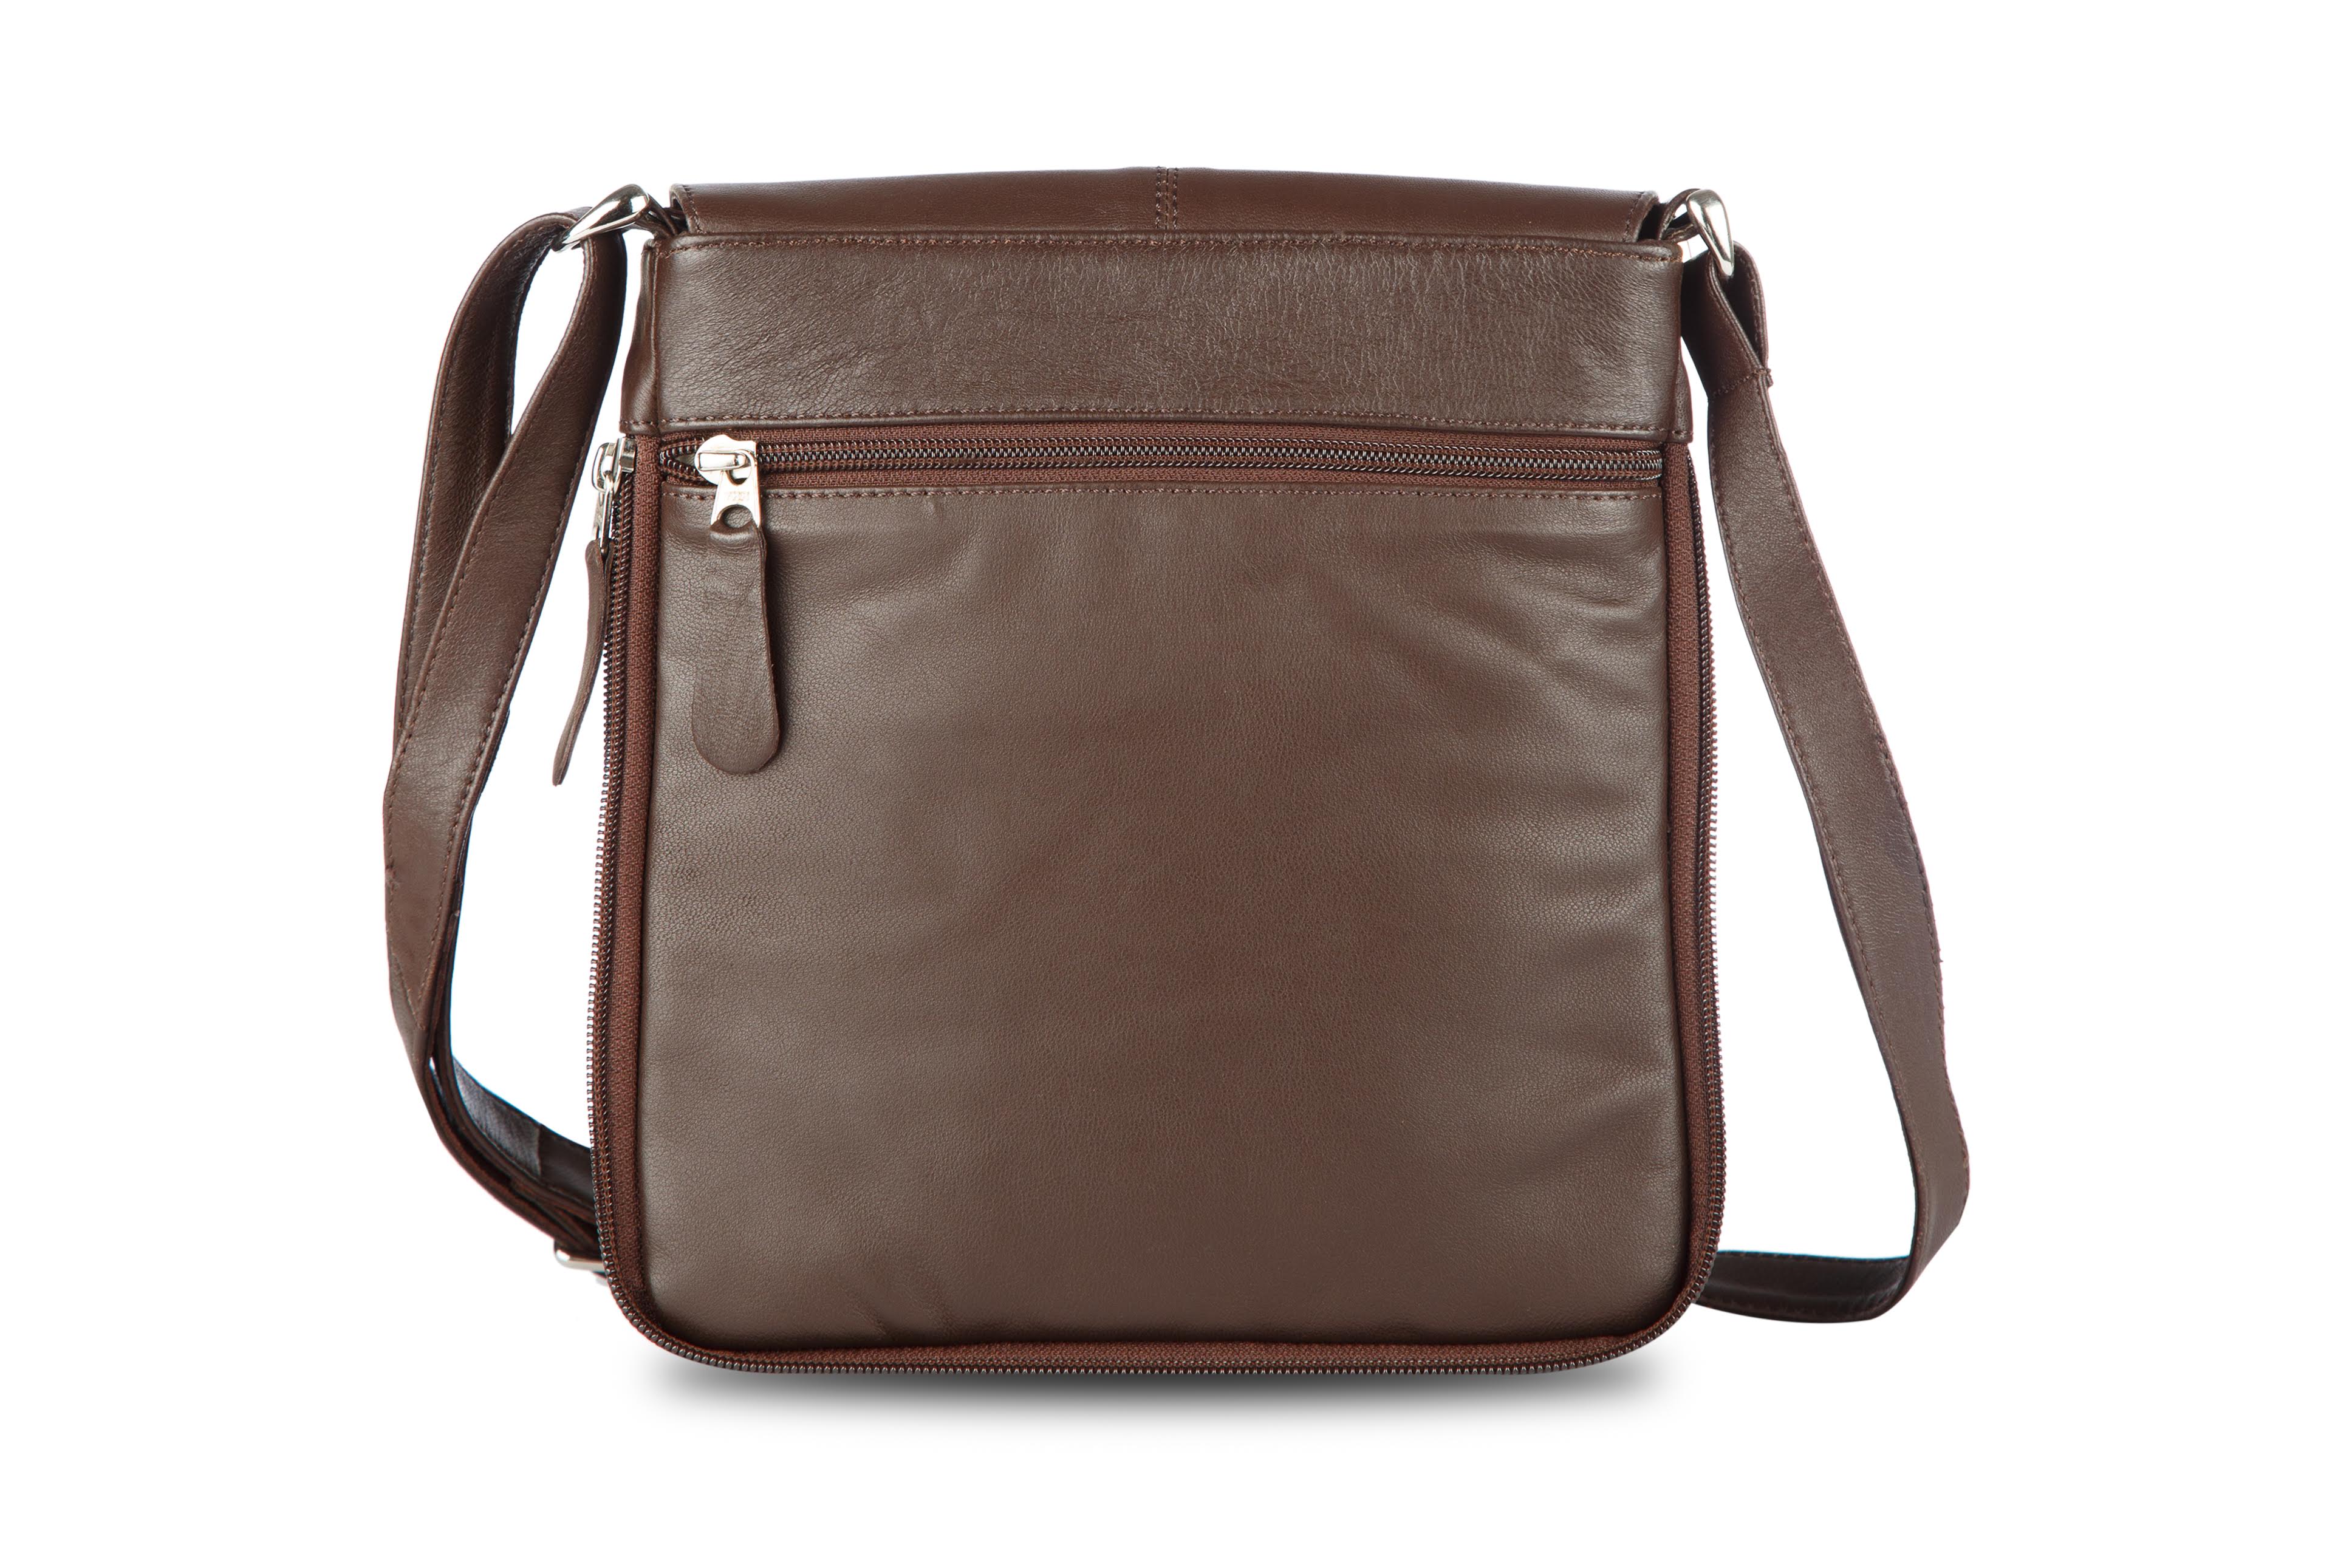 Brown leather Cross Body Bag